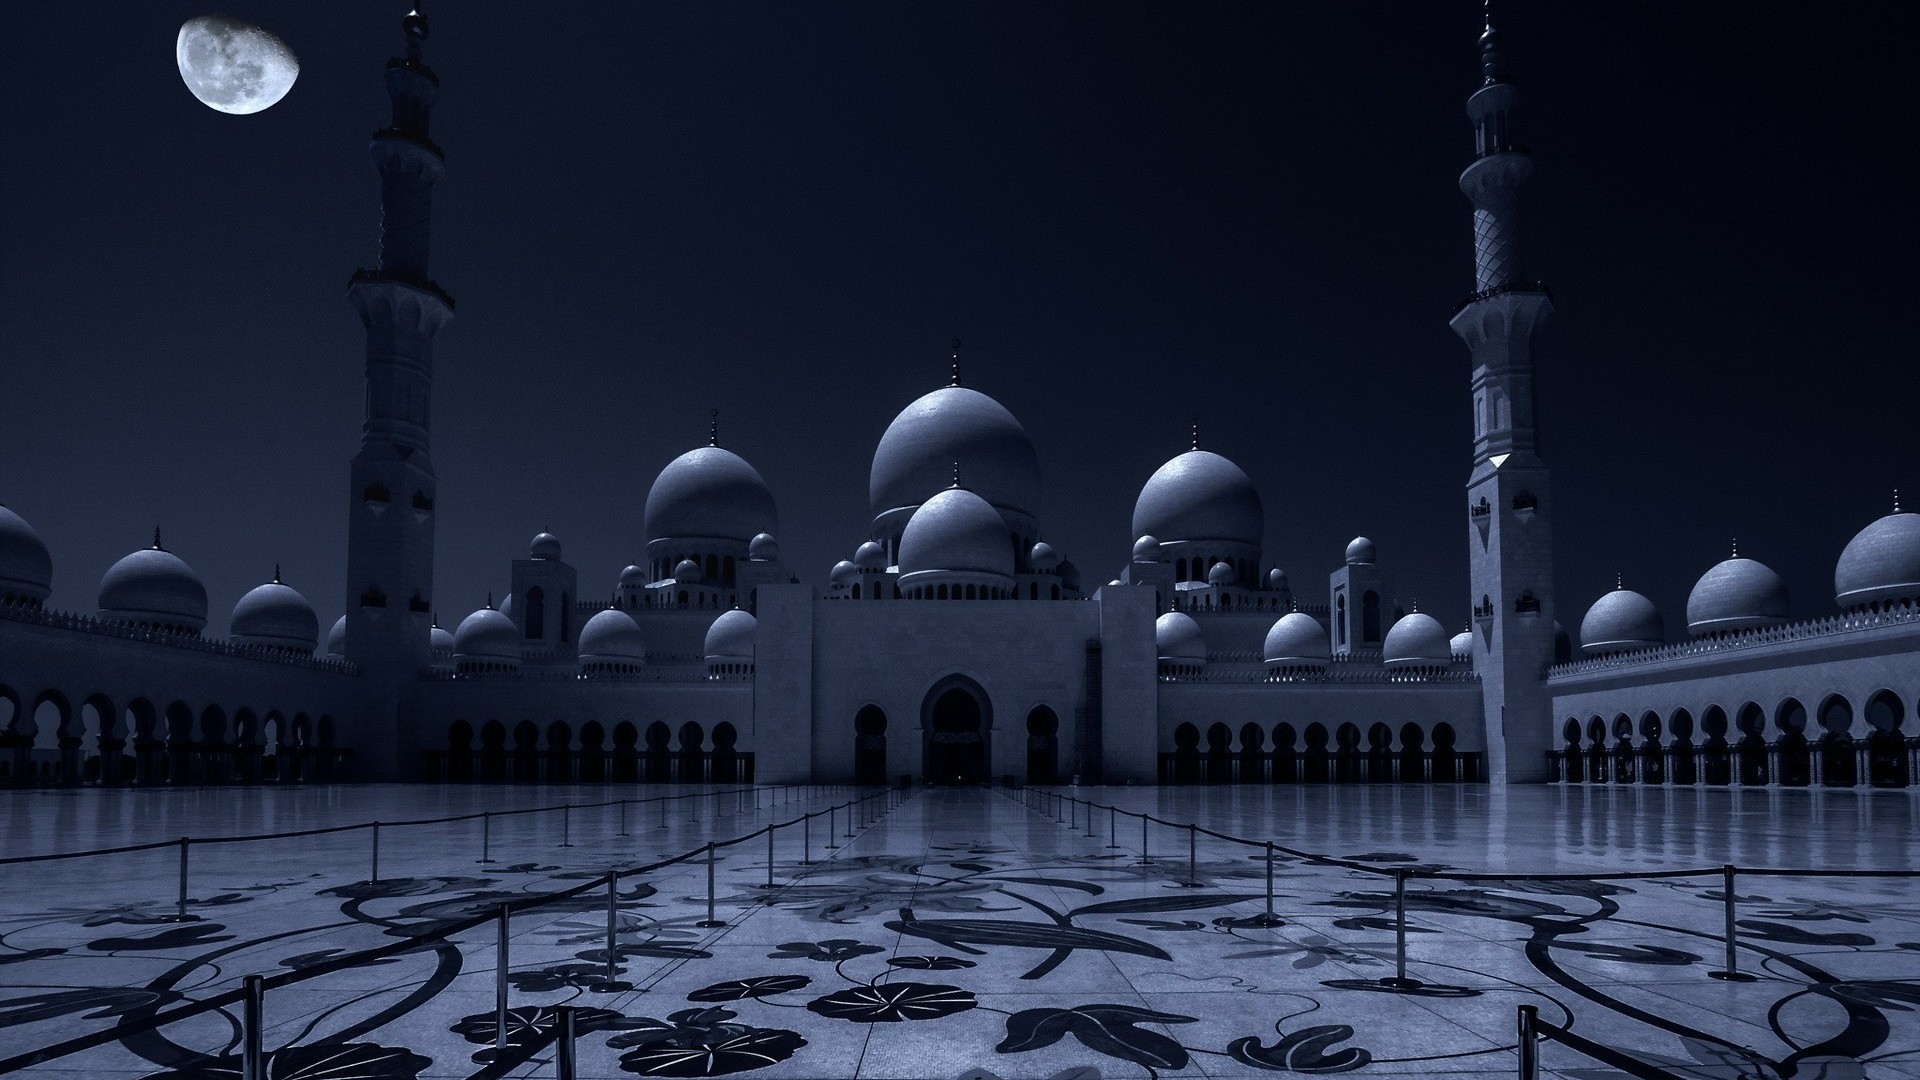 Grand Mosque Abu Dhabi Wallpaper 9 1920 X 1080 1920x1080